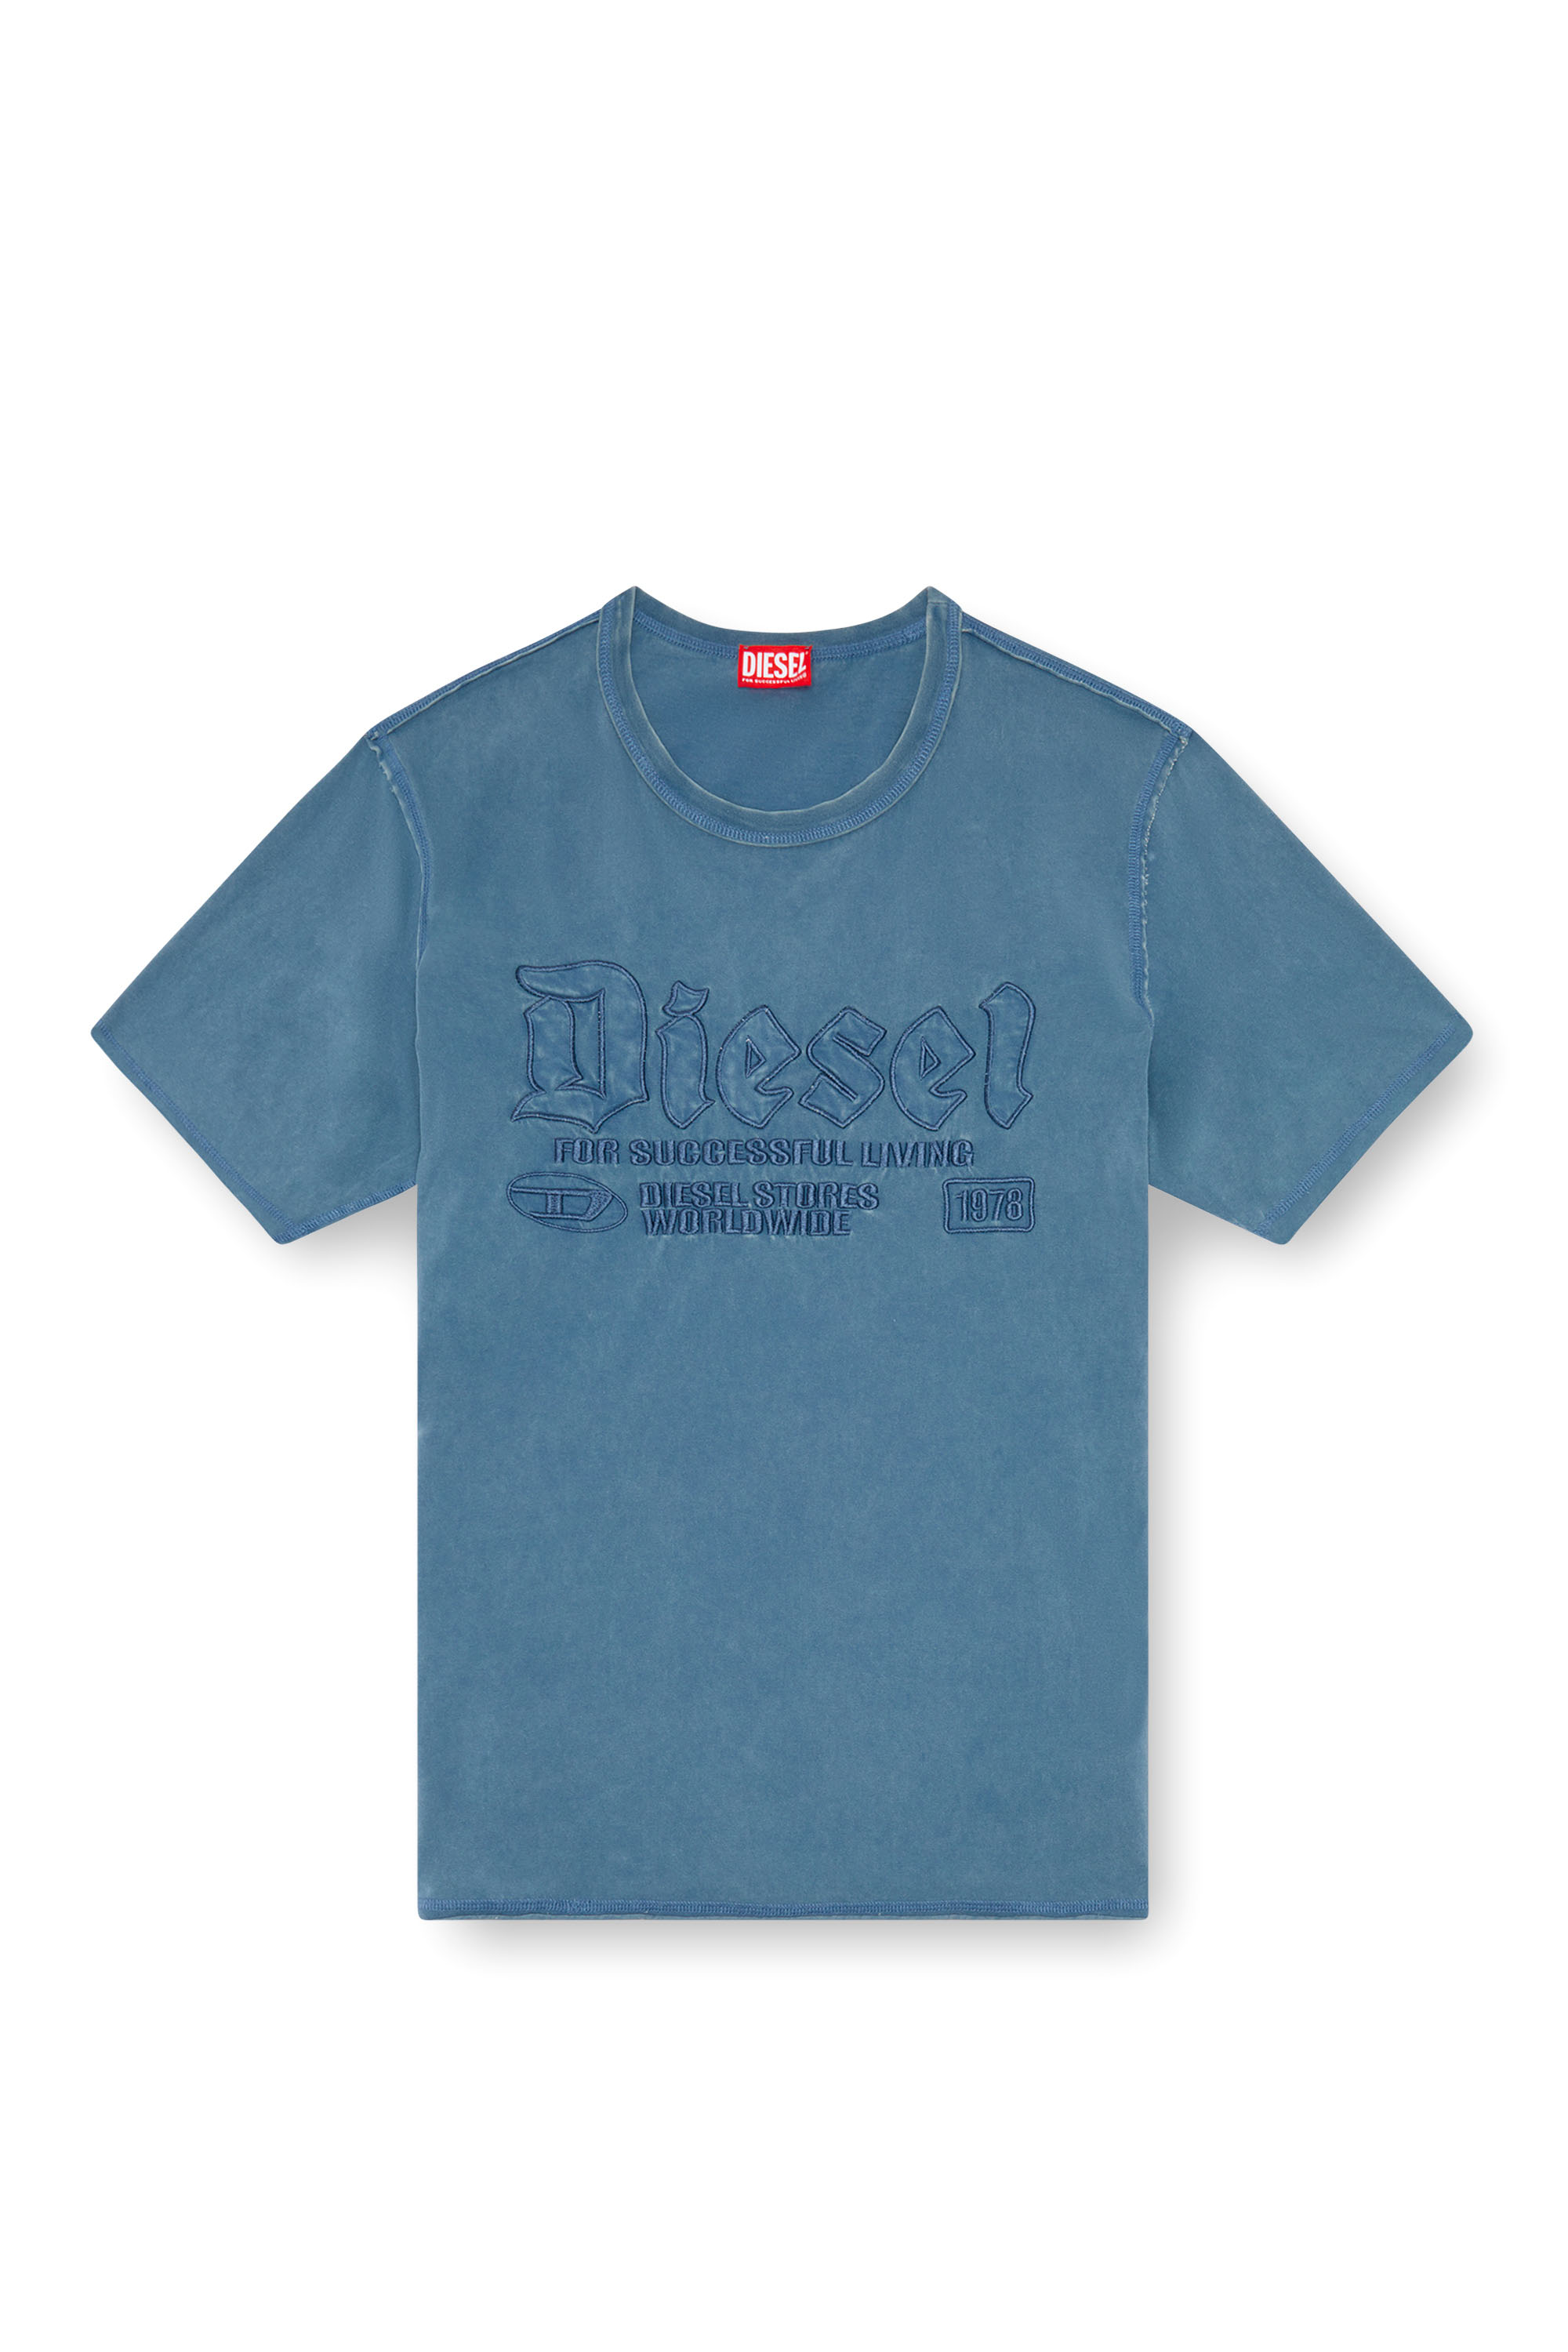 Diesel - T-RAWJUST, Hombre Camiseta desteñida con bordado a tono in Azul marino - Image 3